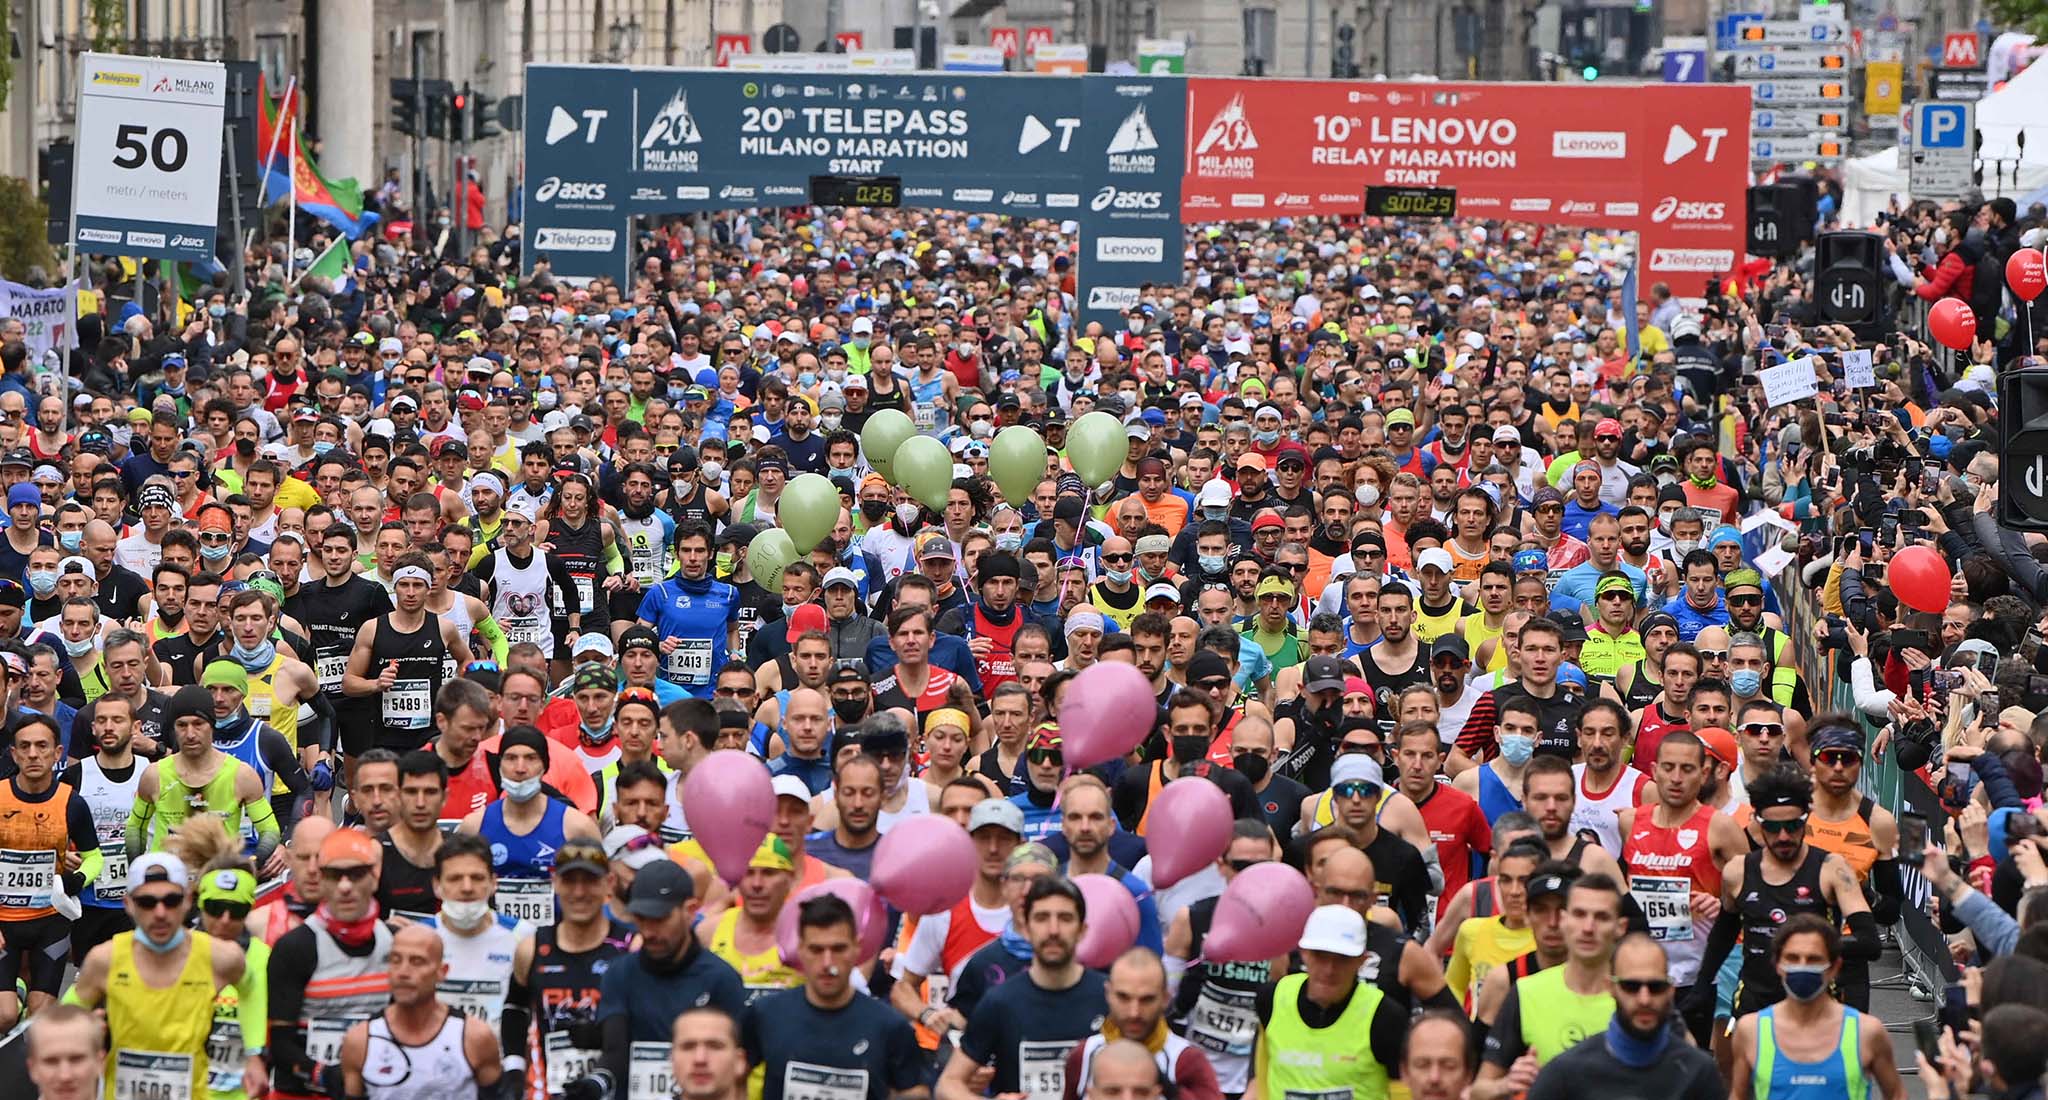 20th Telepass Milano Marathon. The capital city of running